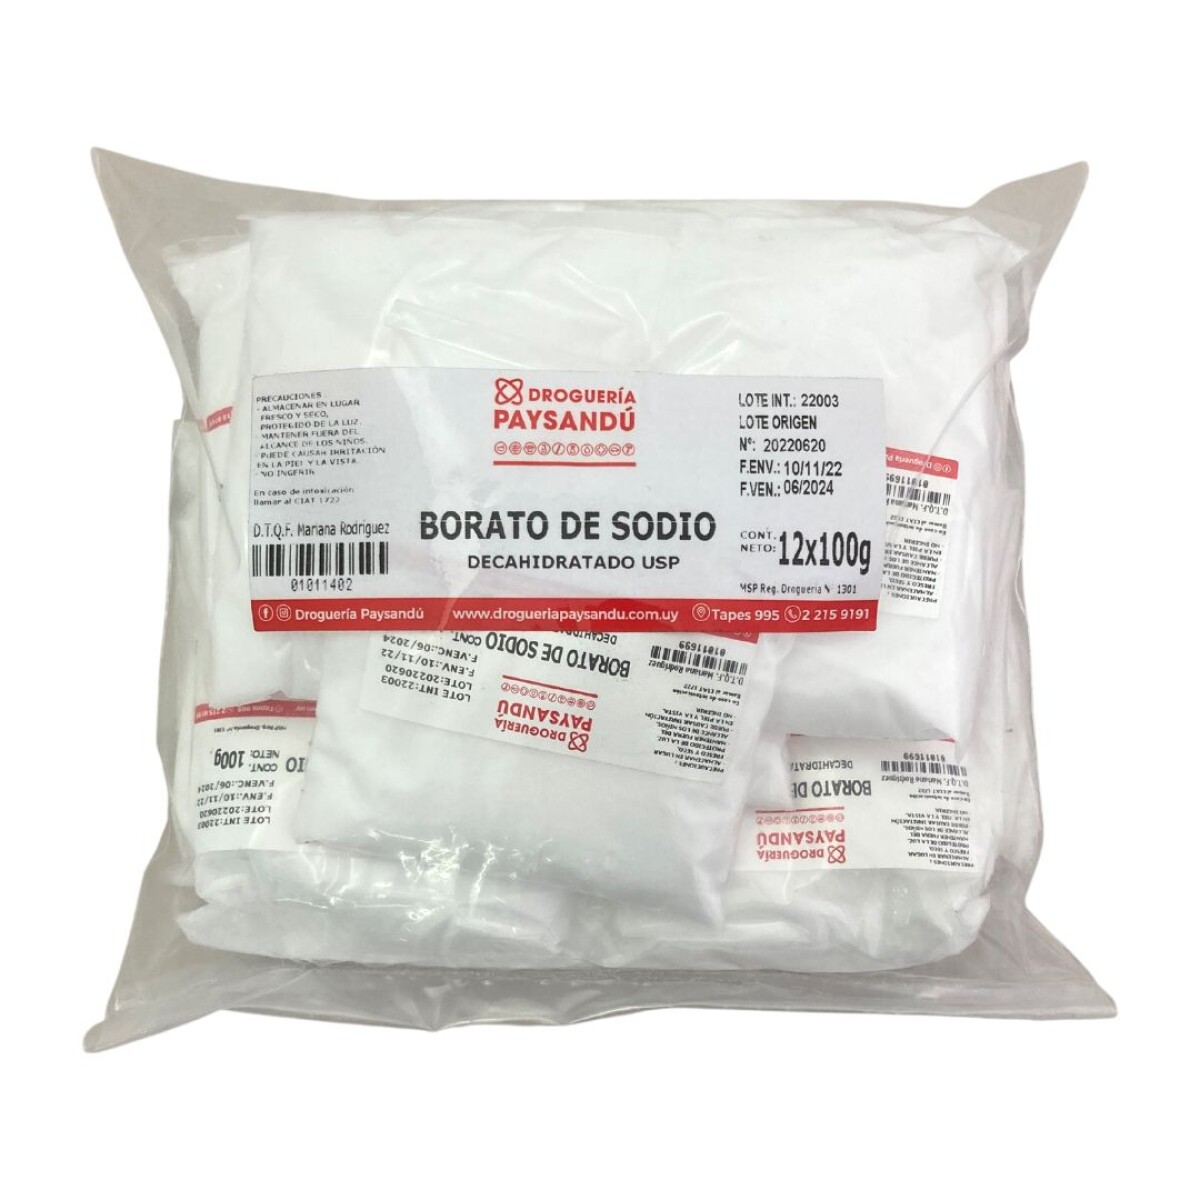 Borato de sodio decahidratado con USP - Pack 12 unidades x 100 g 